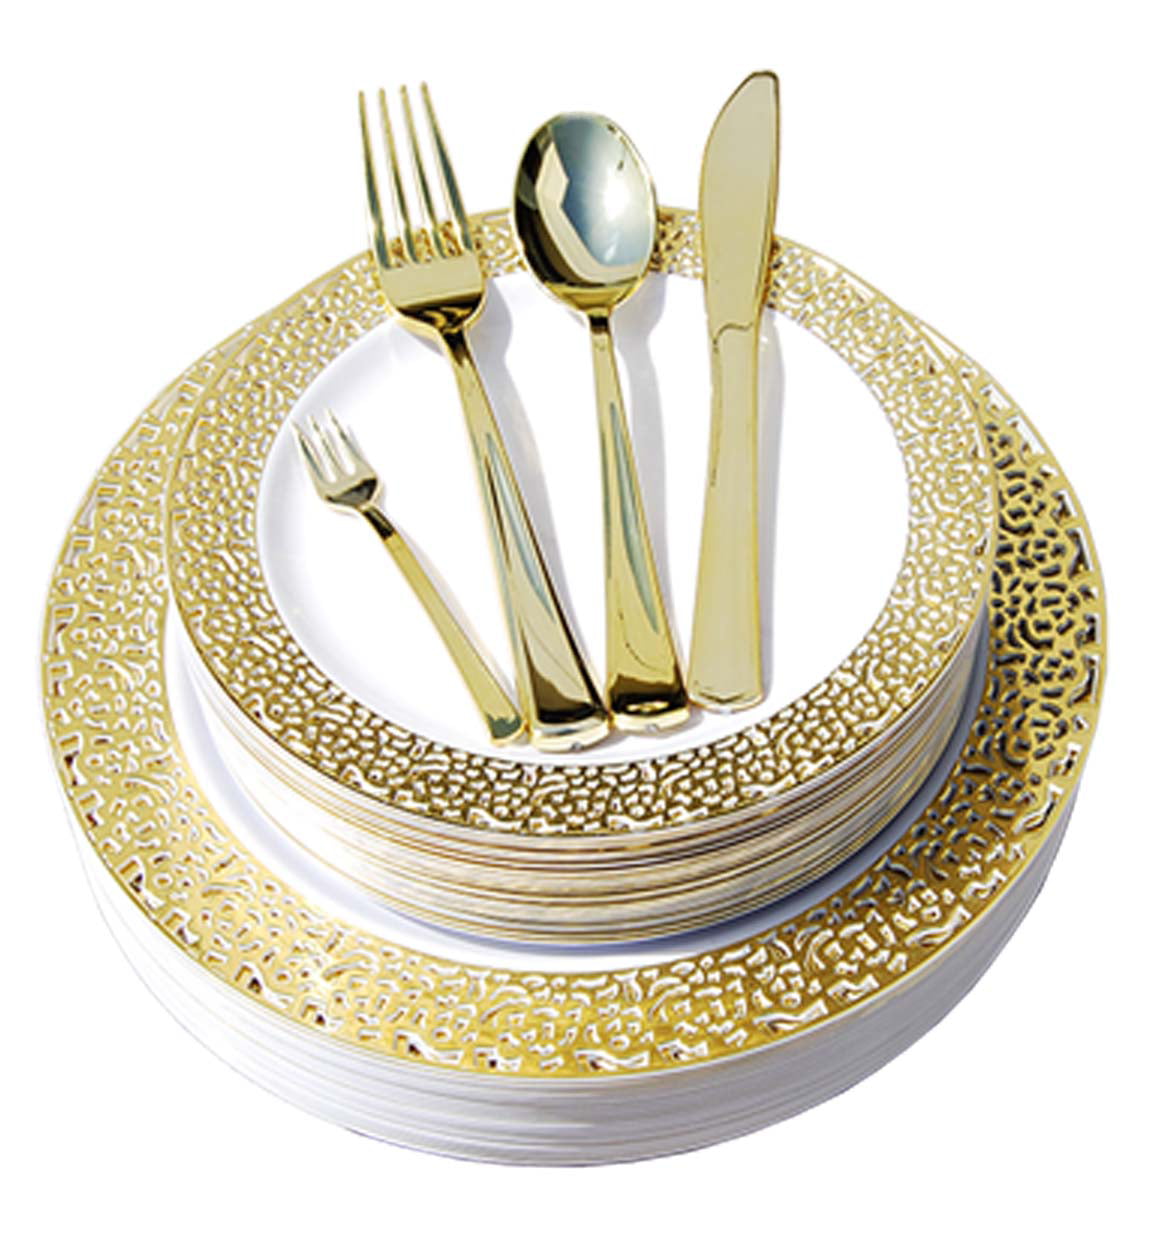 Disposable Plastic Plates Dinner Party Wedding Salad Round Lace Rim Design 150pc